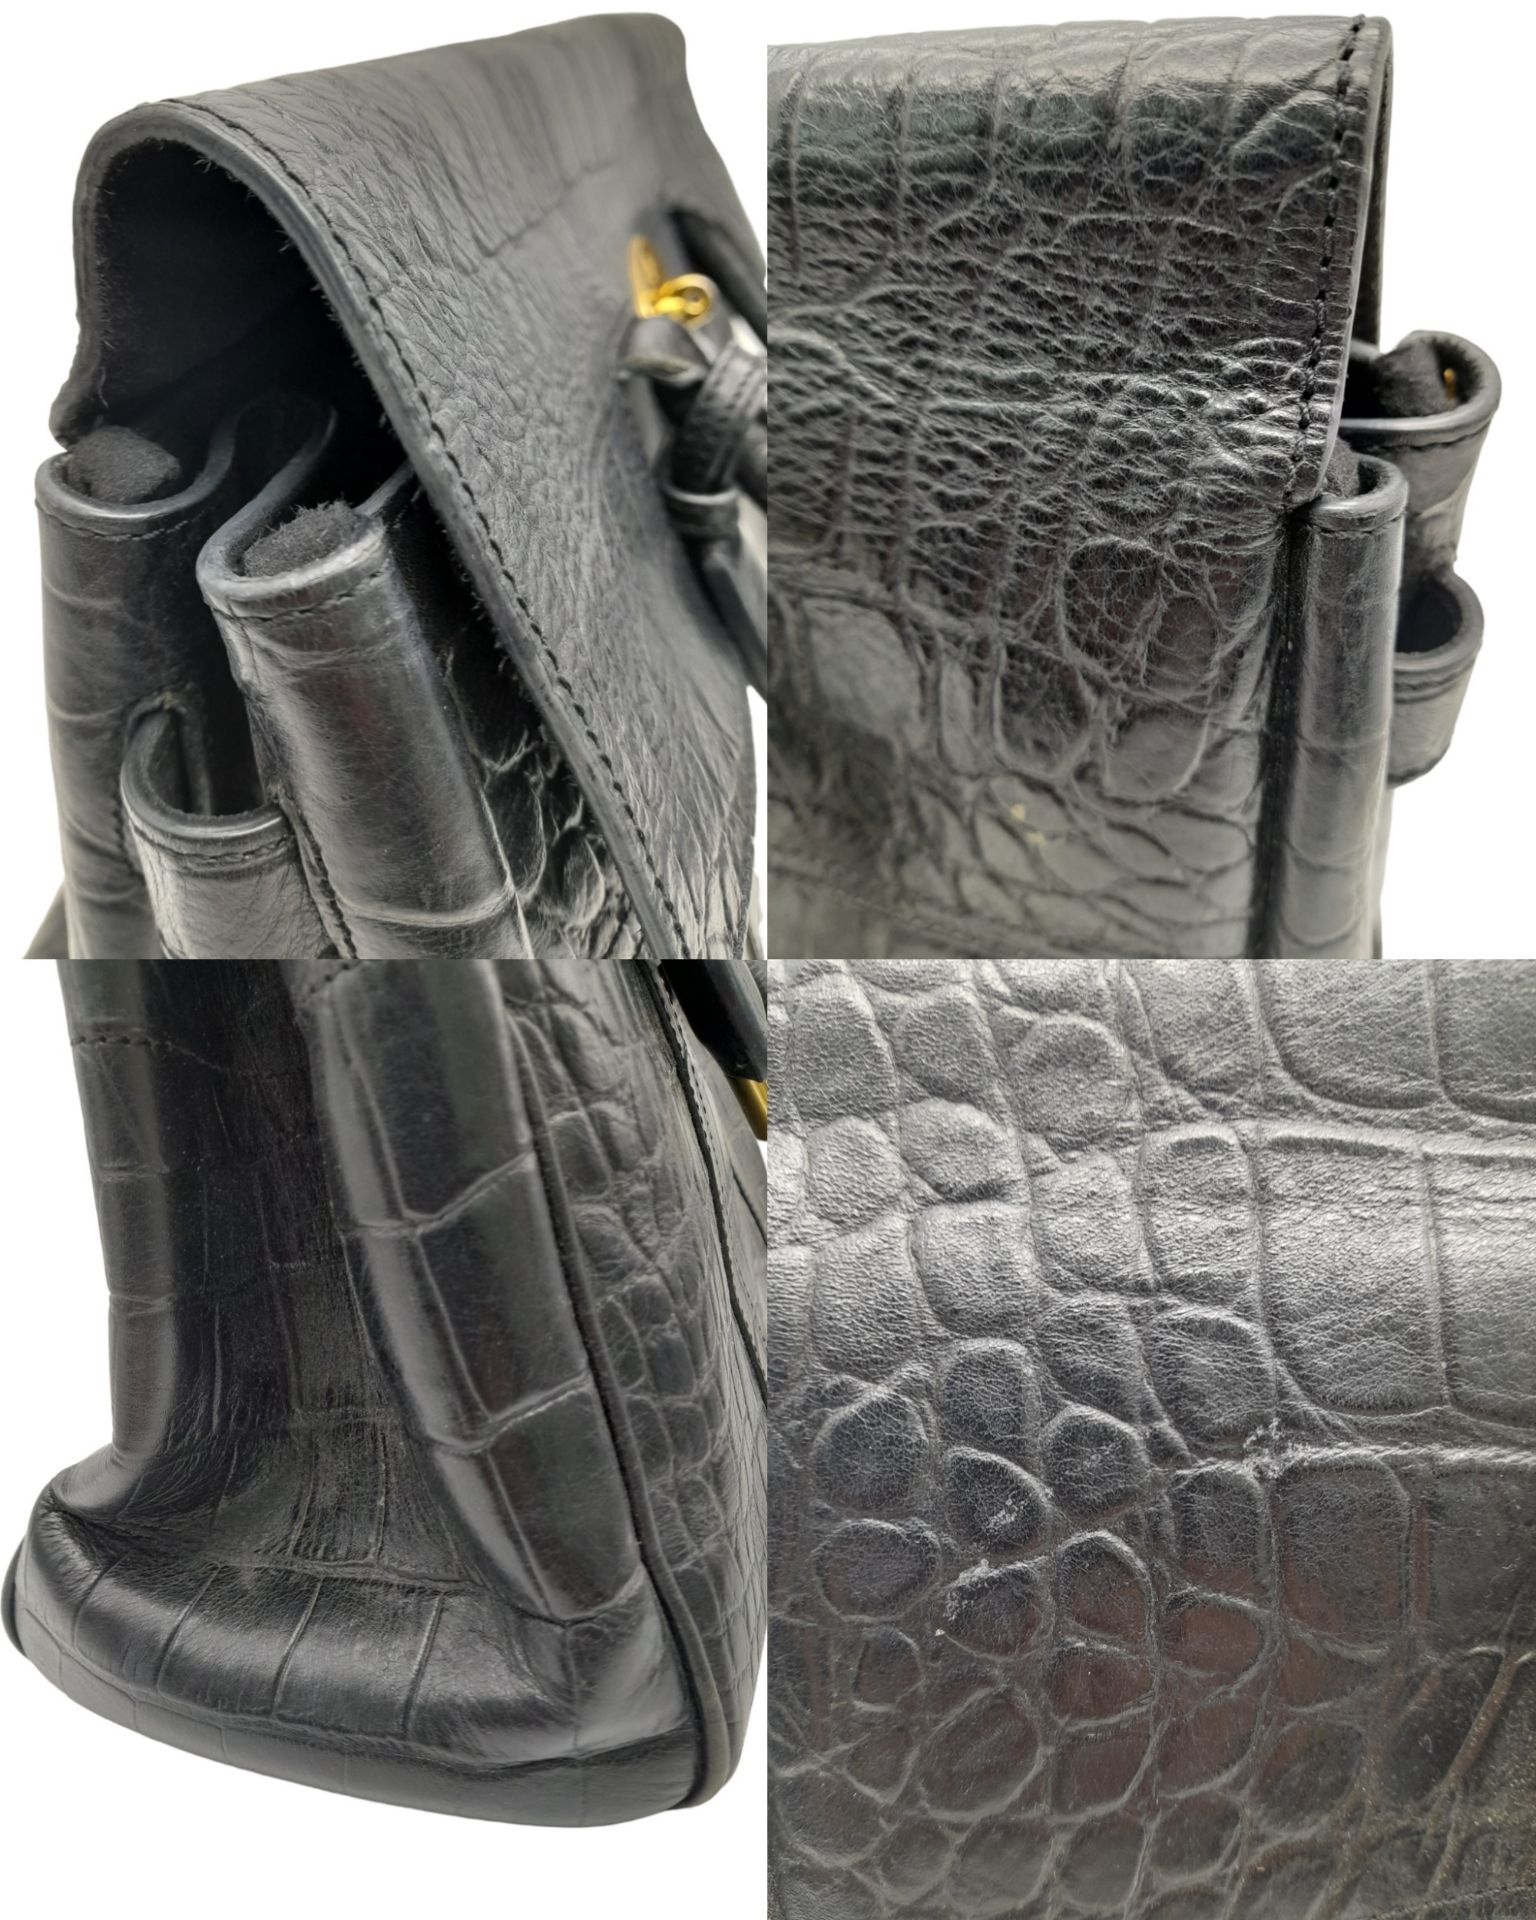 A Mulberry Bayswater Handbag. Black Croc Embossed Leather exterior, gold-tone hardware, a clochette, - Bild 6 aus 7